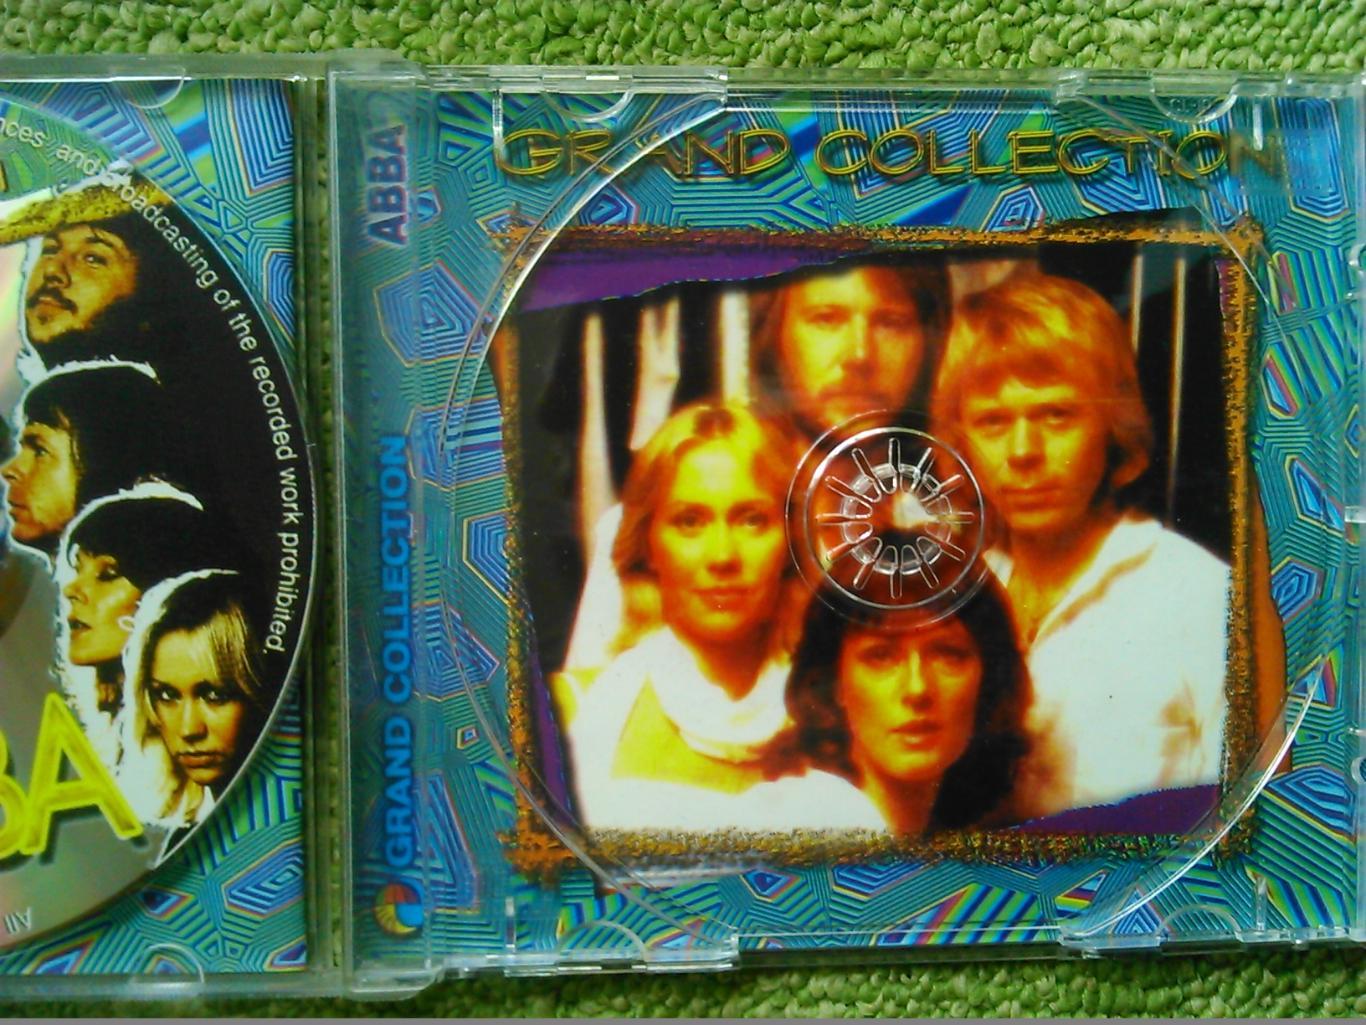 Audio CD ABBA (АББА) Grand Collection. Оптом скидки до 50% 2